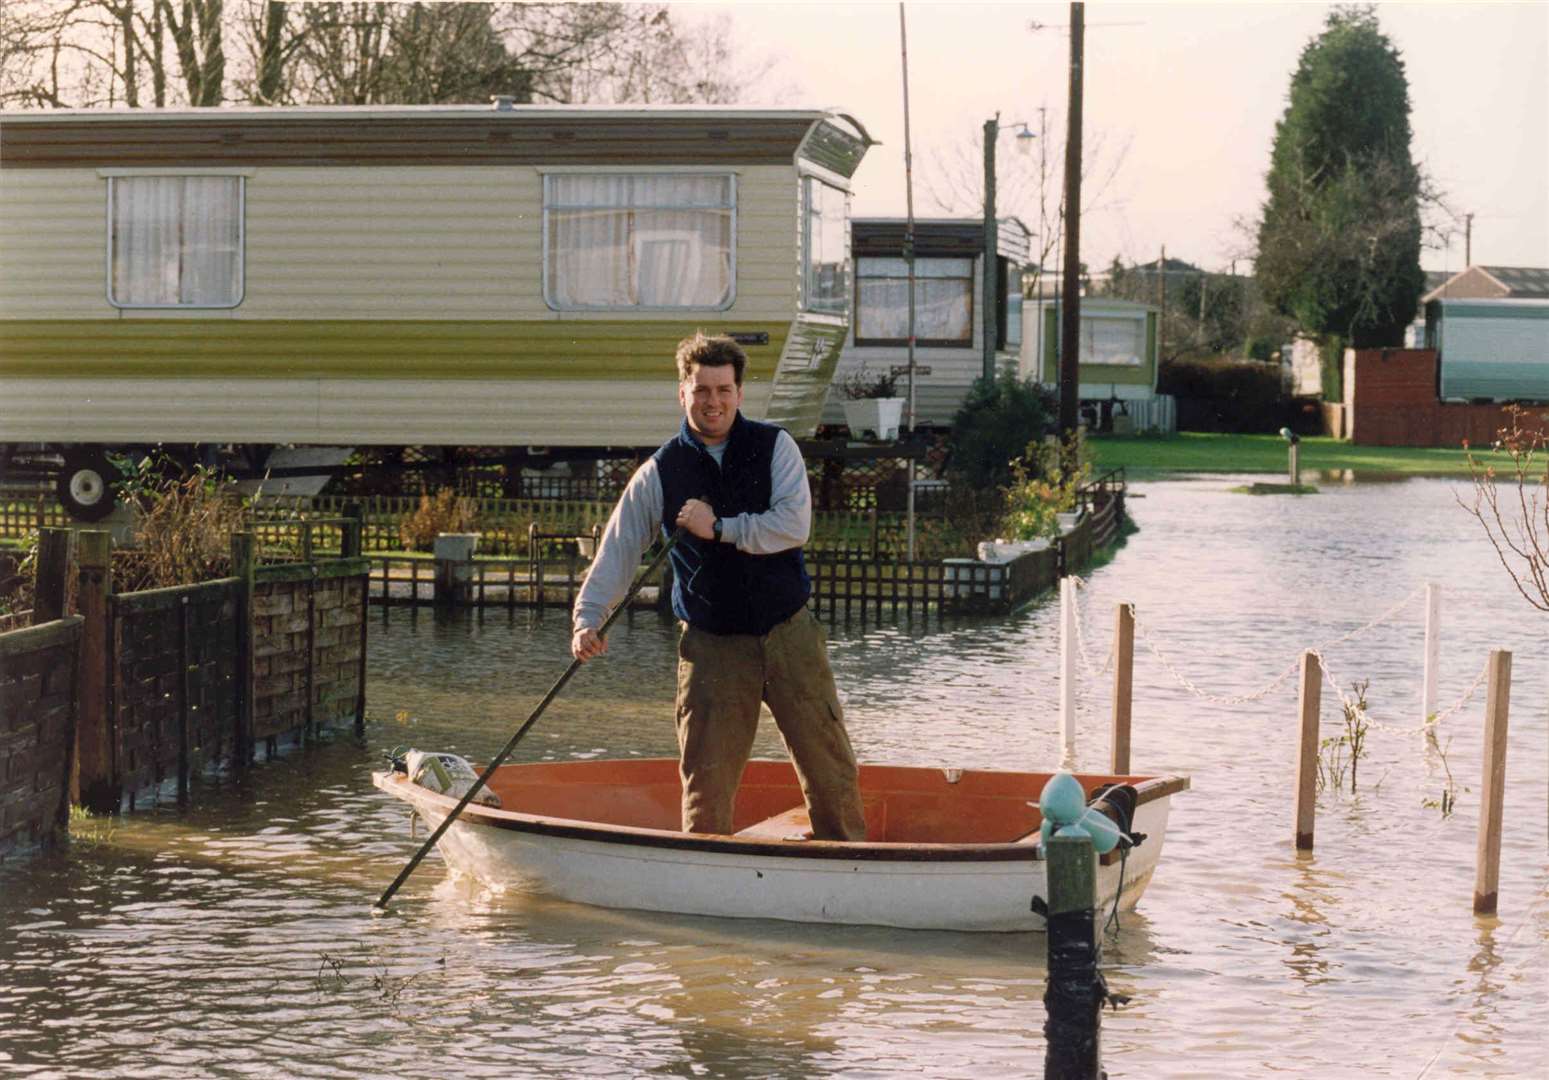 Flooding in Yalding in 1993